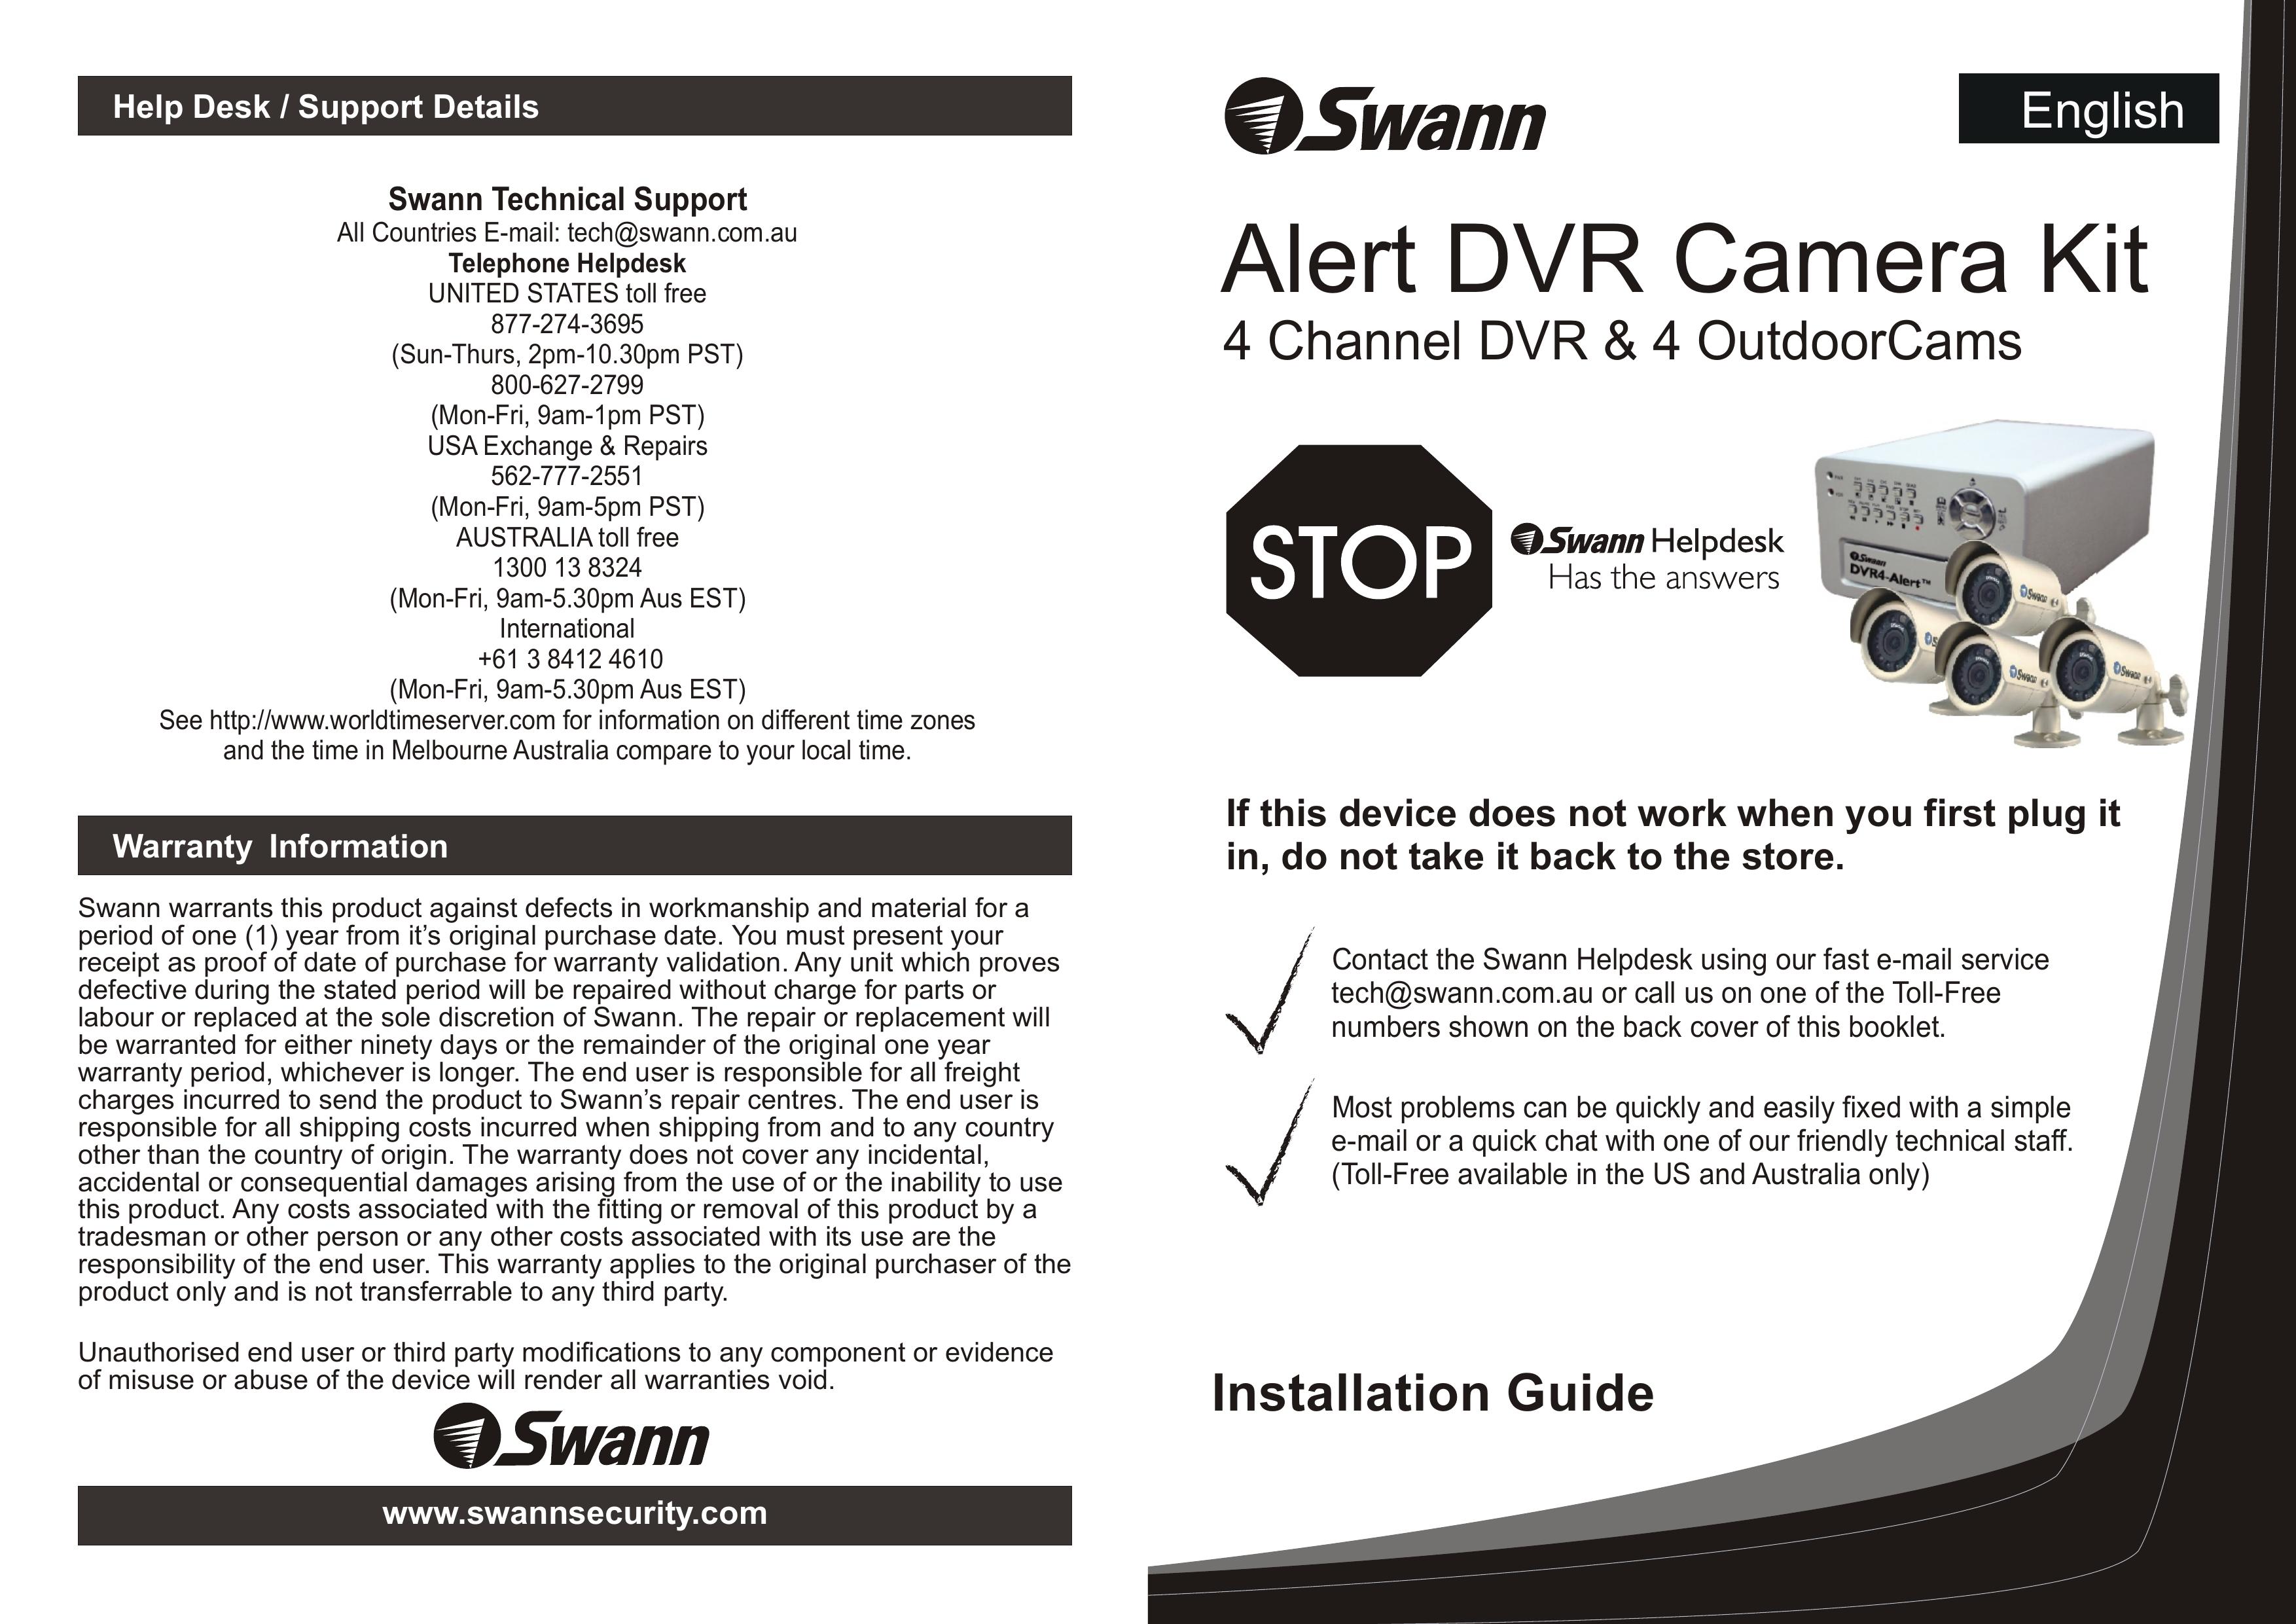 Swann Alert DVR Camera Kit Security Camera User Manual